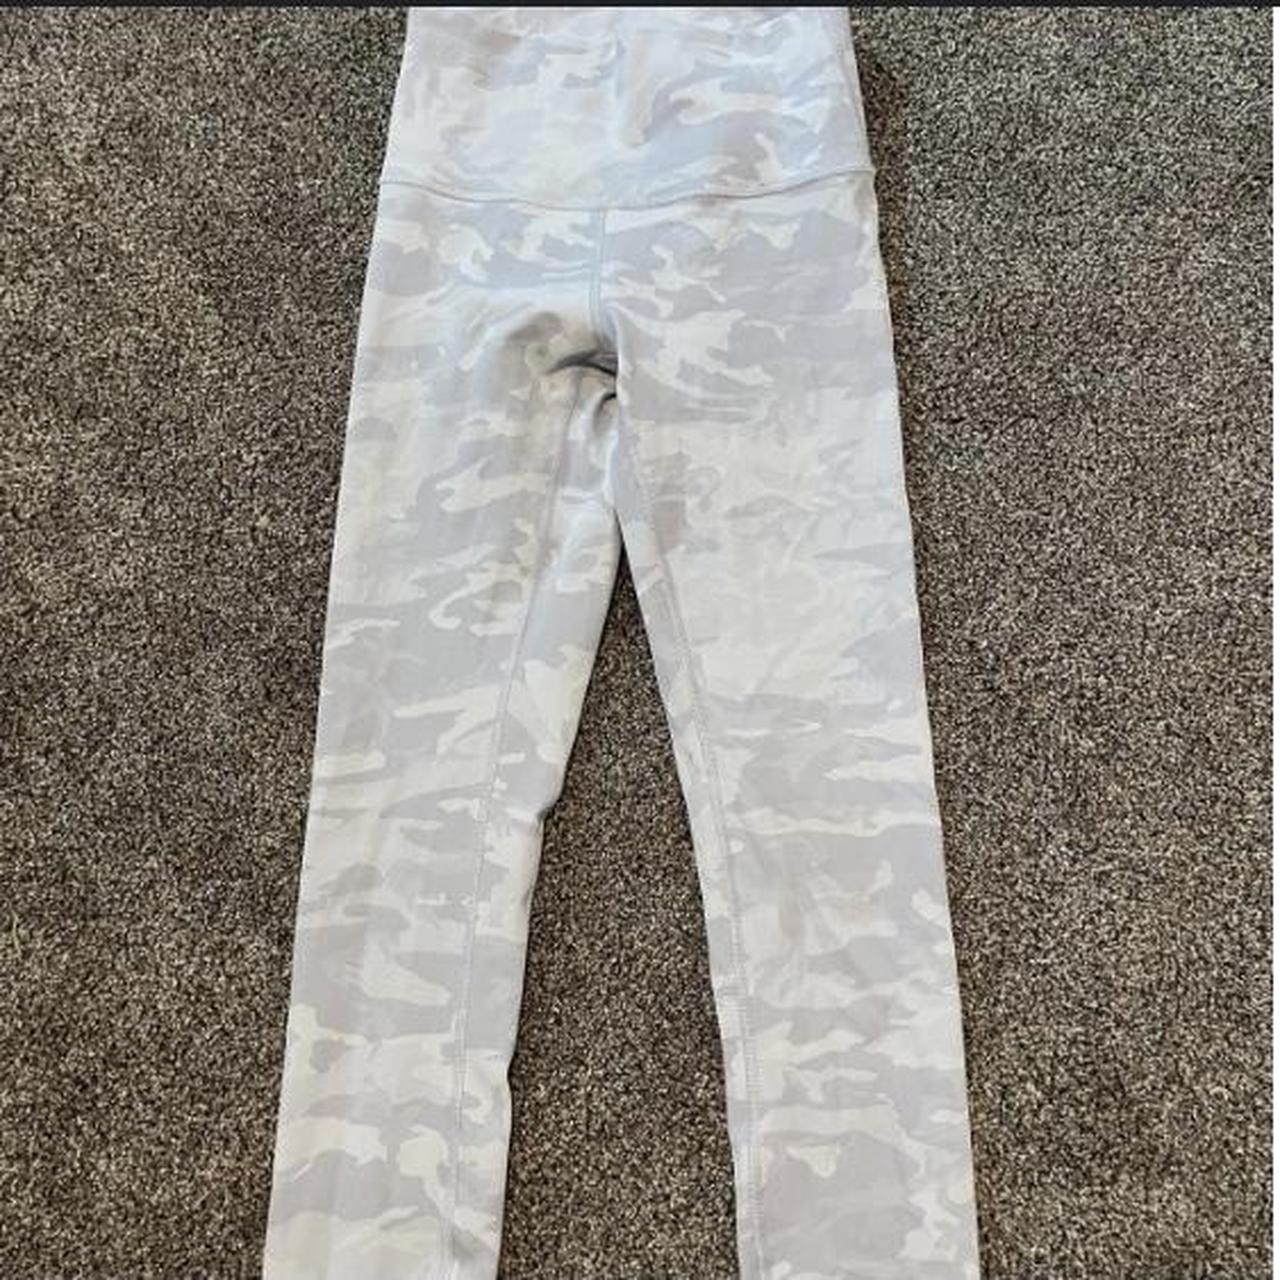 white camo lululemon leggings,worn twice no - Depop